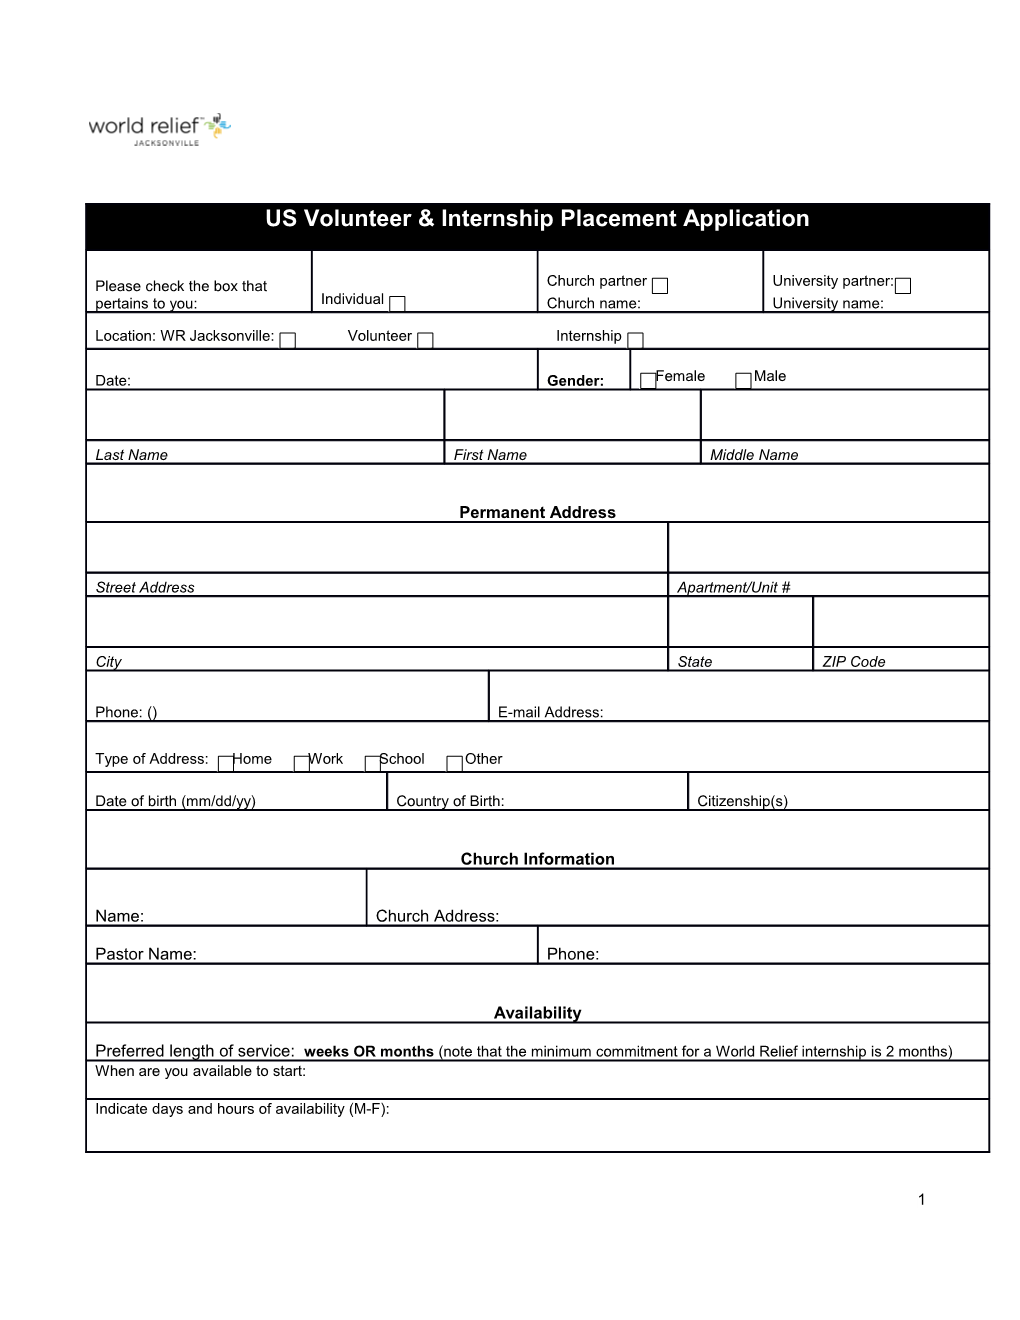 US Volunteer & Internship Placement Application